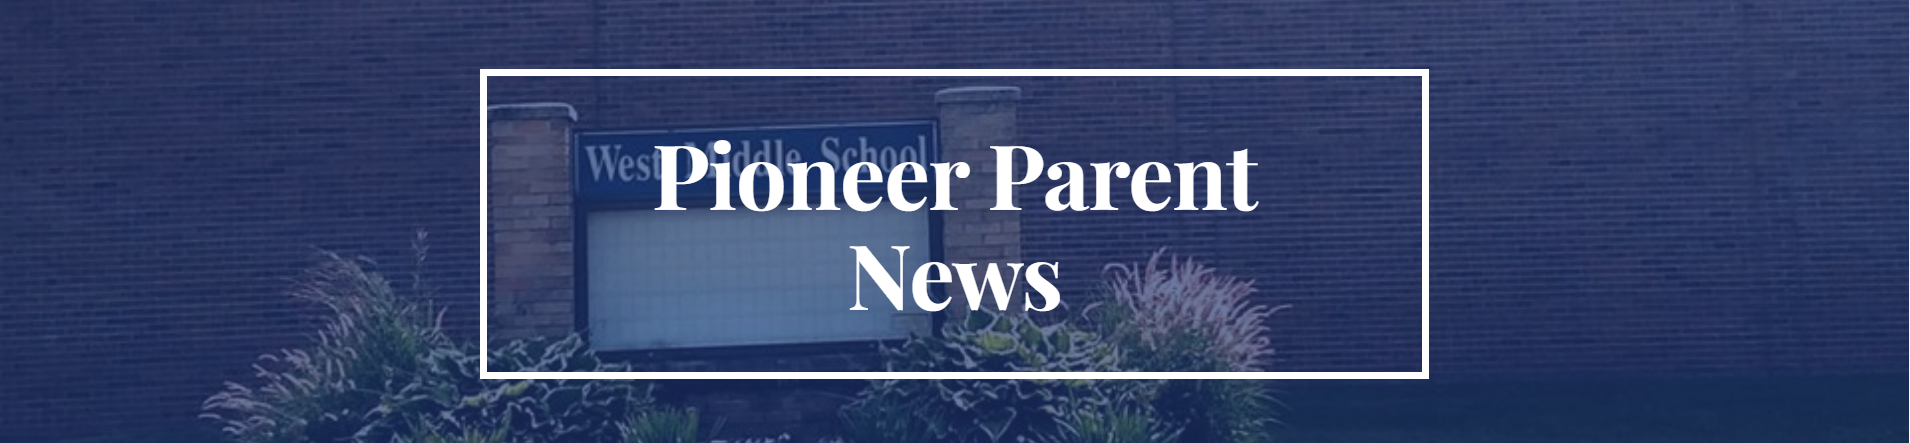 Pioneer Parent News